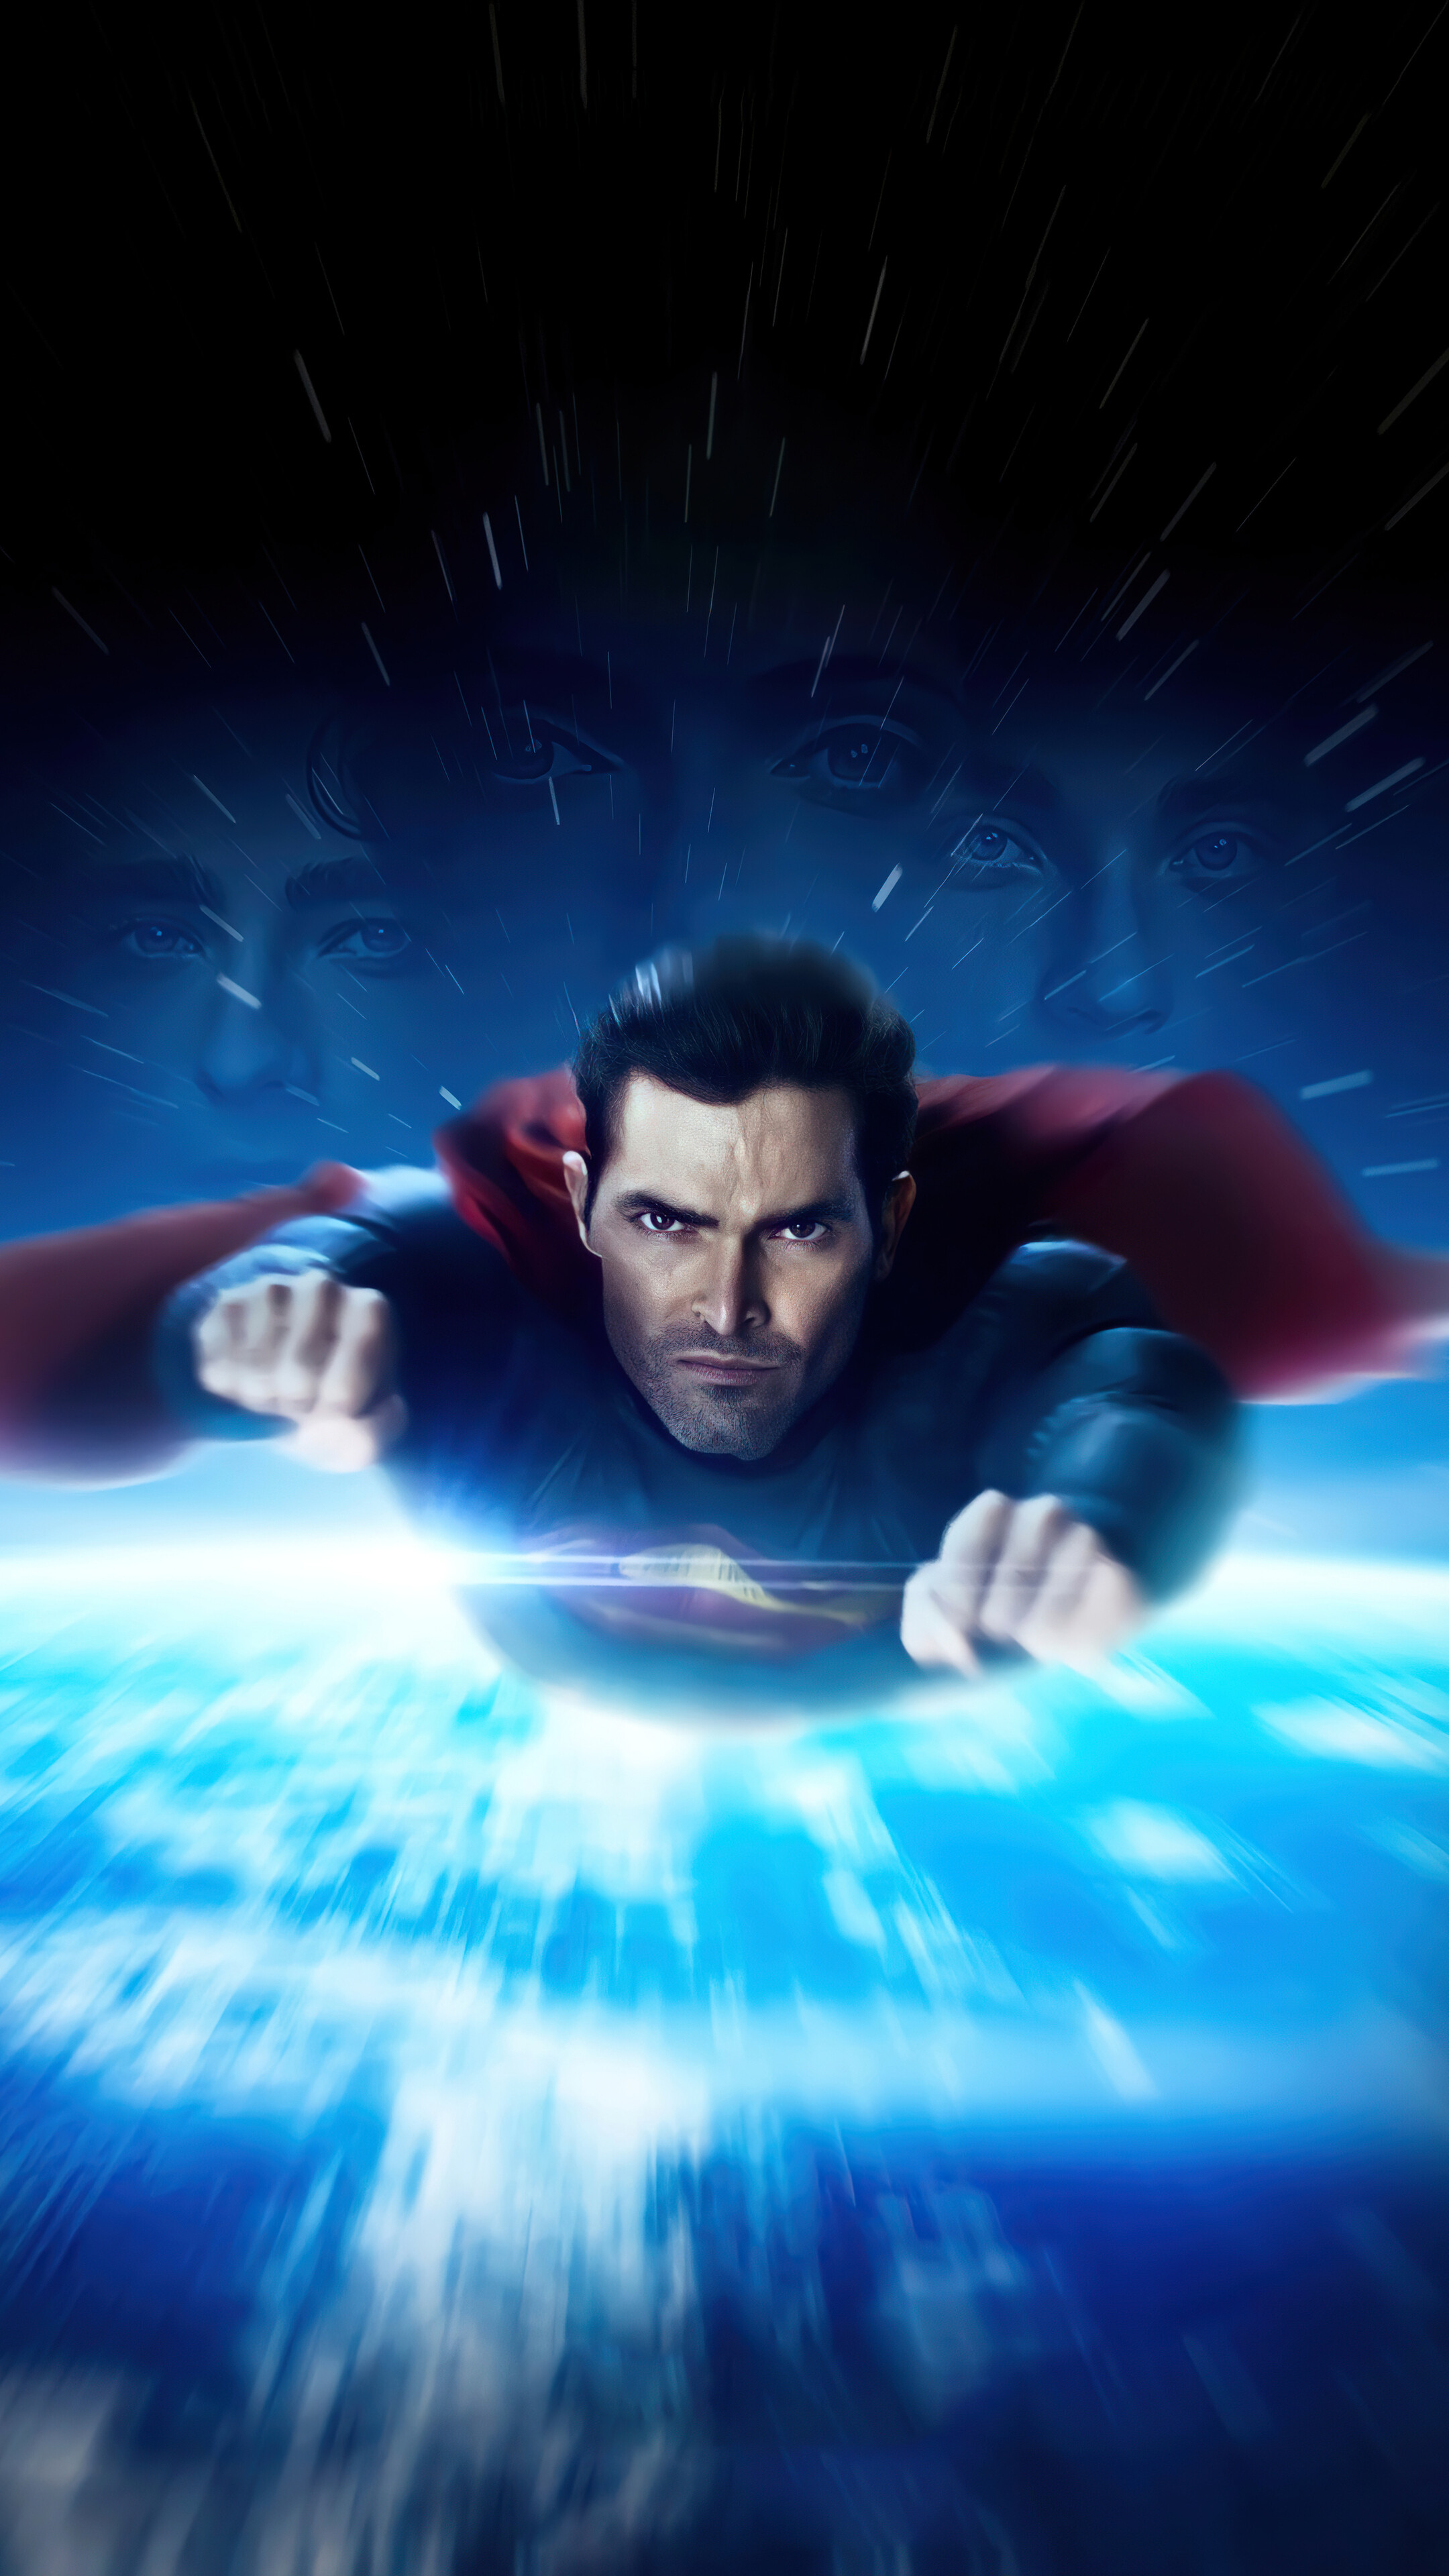 Superman and Lois (TV Series): Clark Kent, Earth's greatest superhero, portrayed by Tyler Hoechlin. 2160x3840 4K Wallpaper.